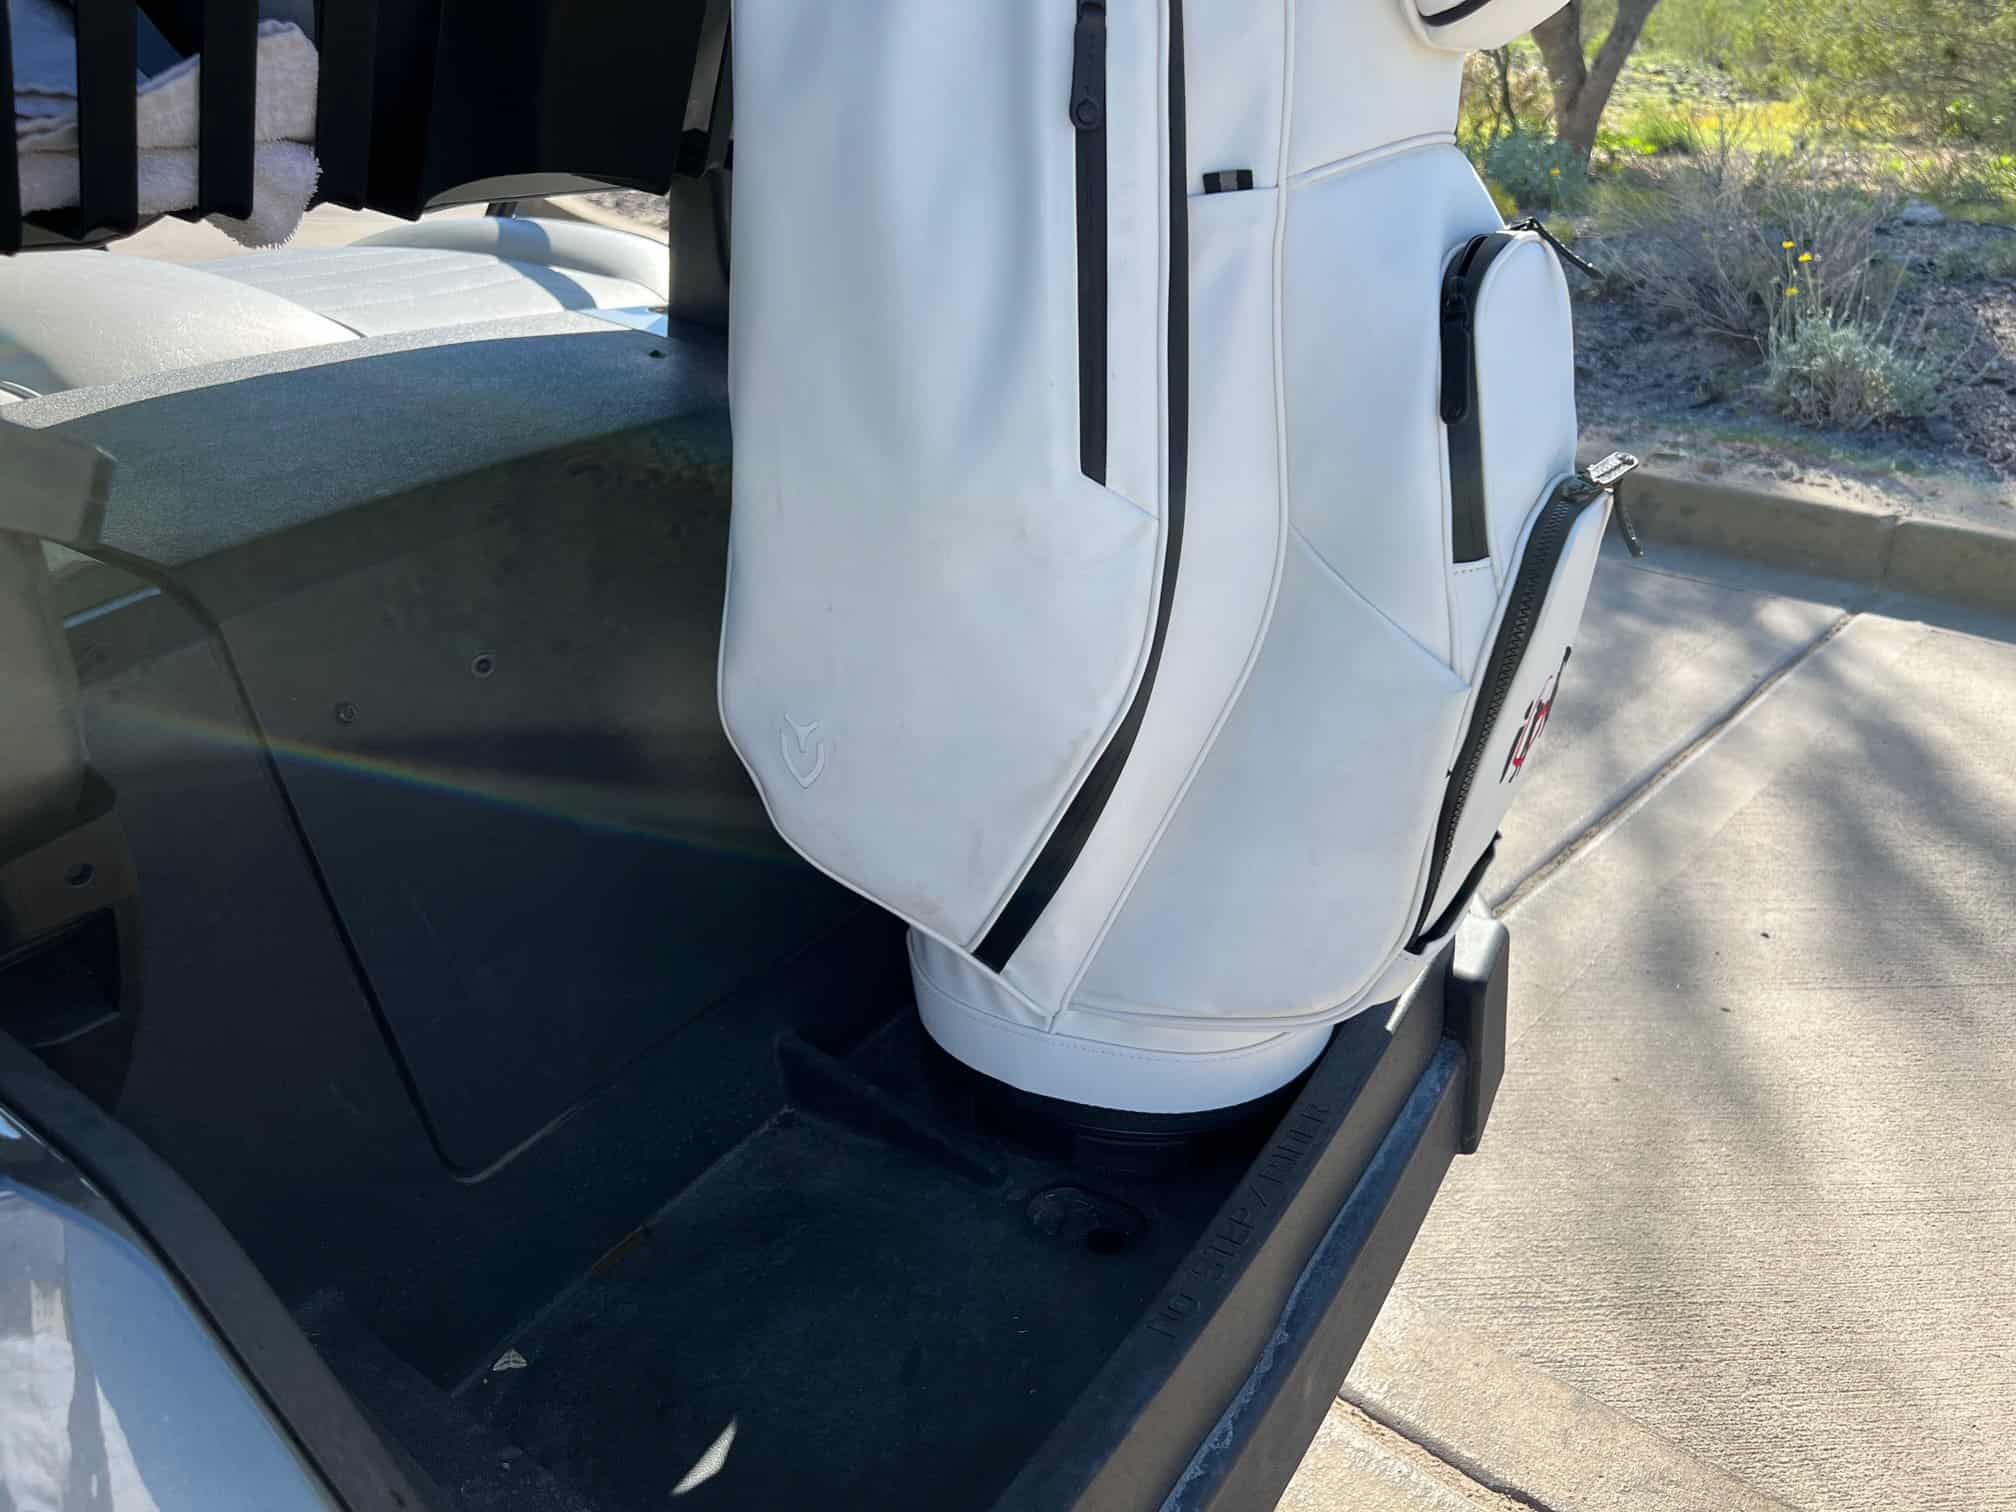 Vessel LUX Cart 2.0 Bag - Independent Golf Reviews